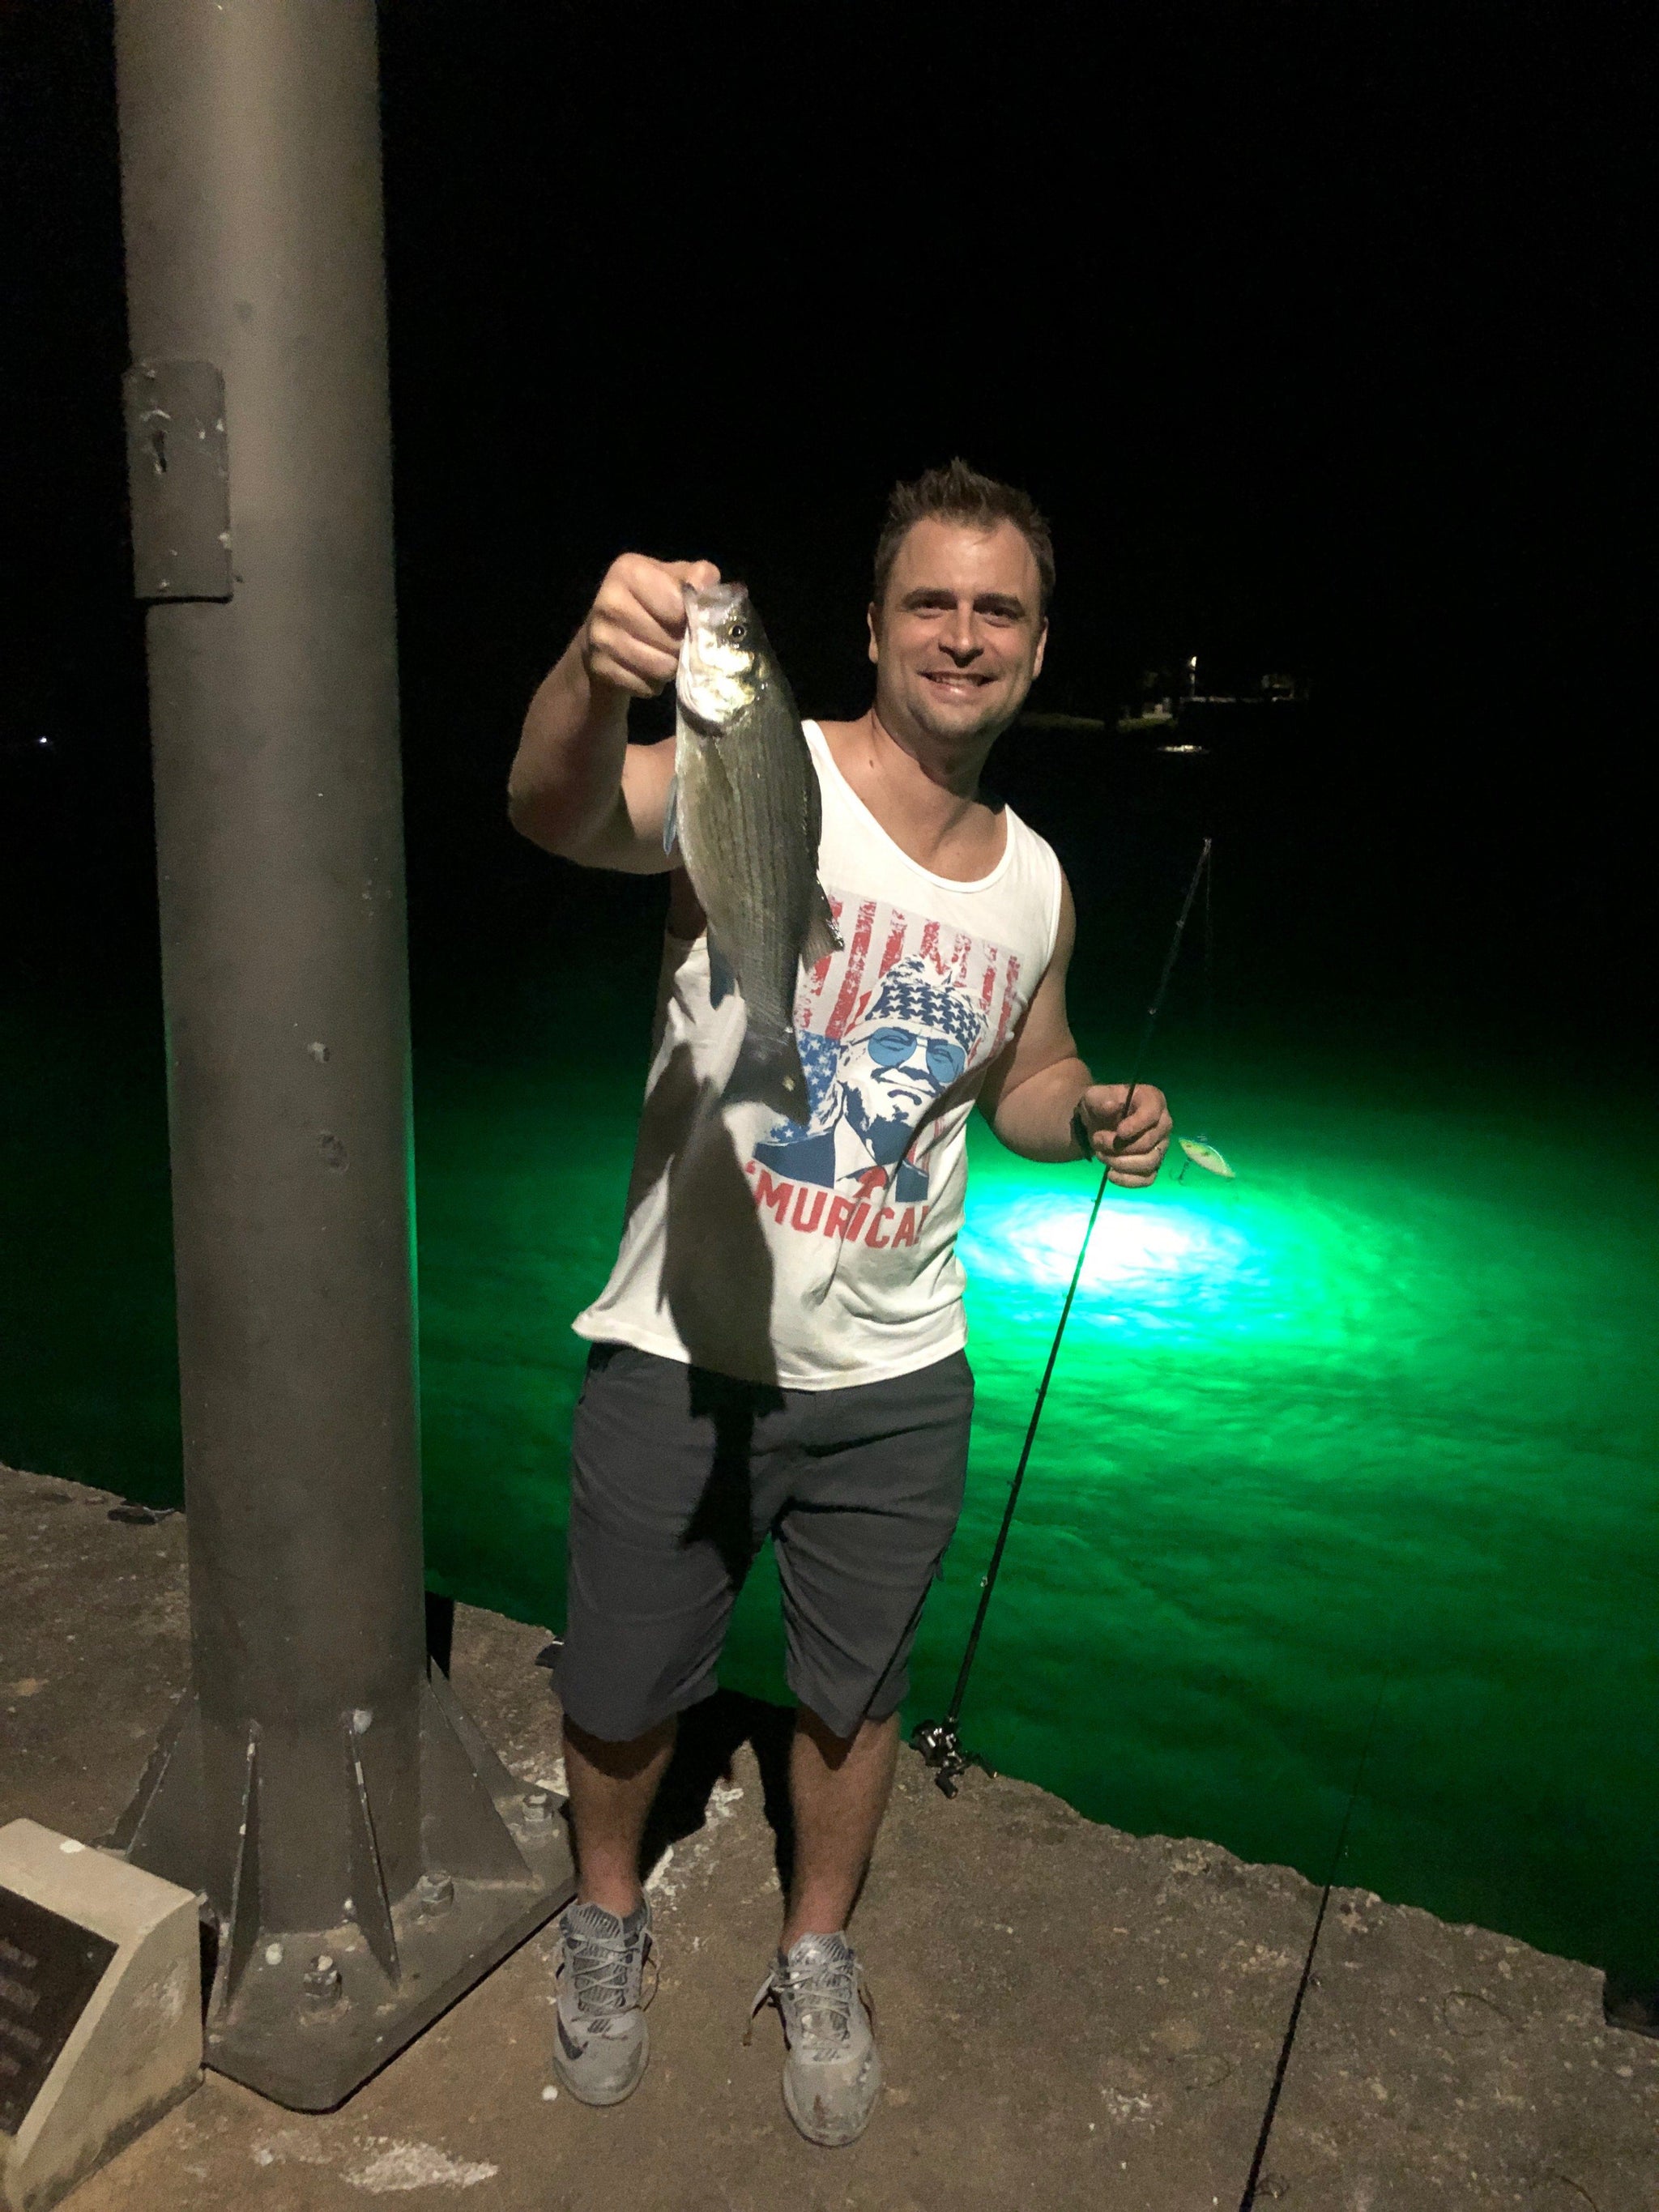 7500 Lumen Green Blob LED Underwater Fishing Light - Durable